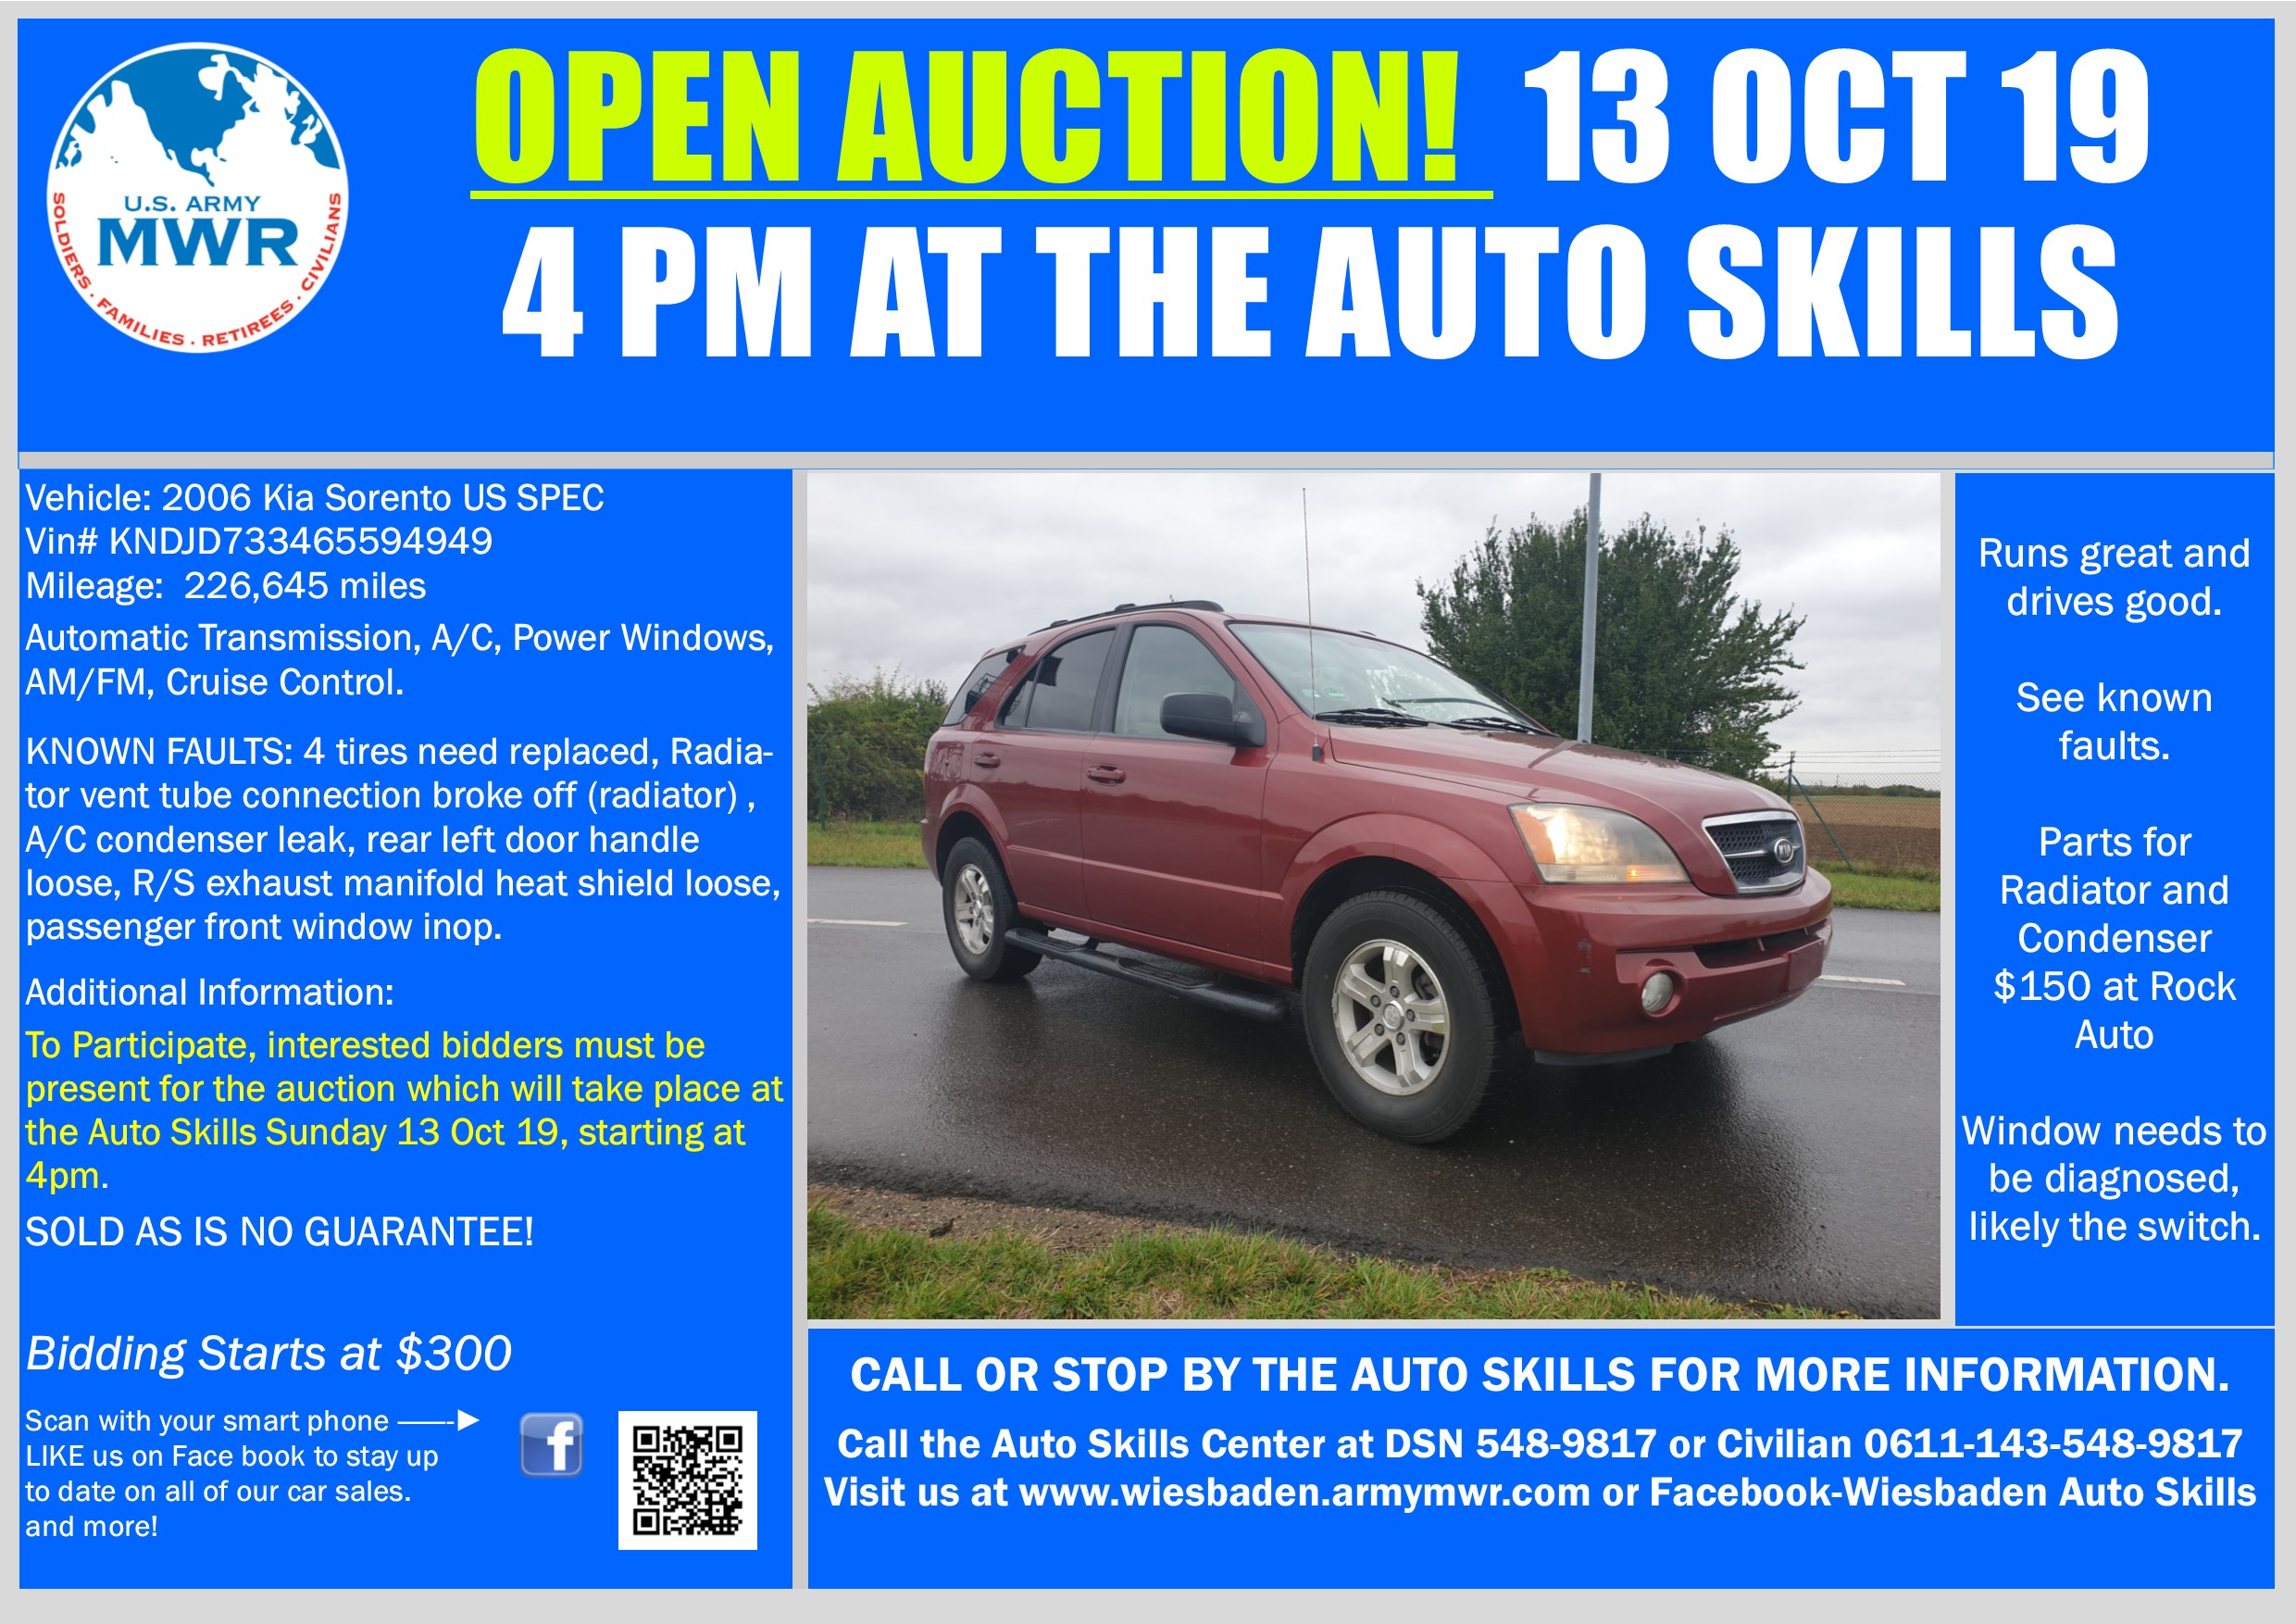 Sale Kia Sorento 13 Oct 19 Open Auction (002).jpg